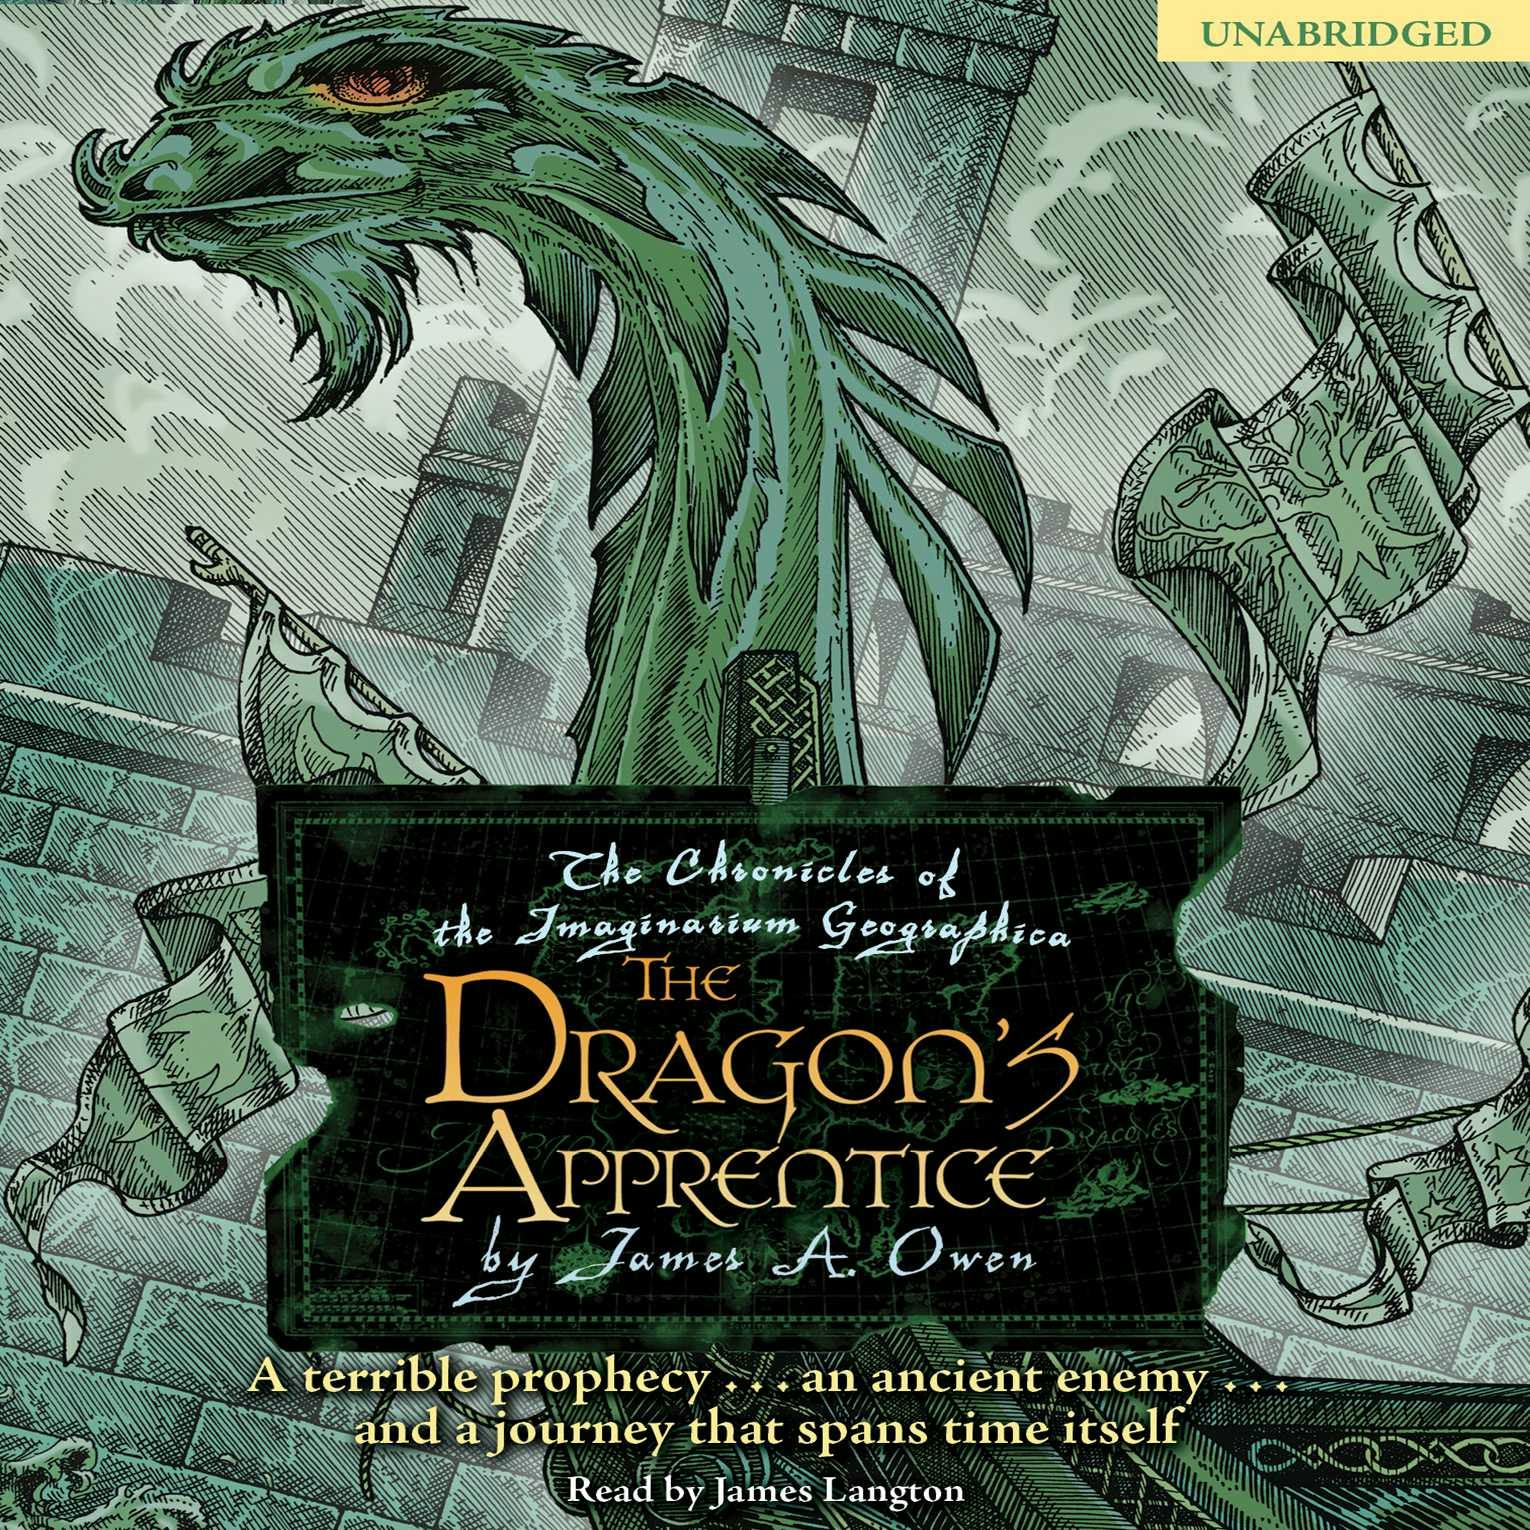 The Dragon's Apprentice - undefined